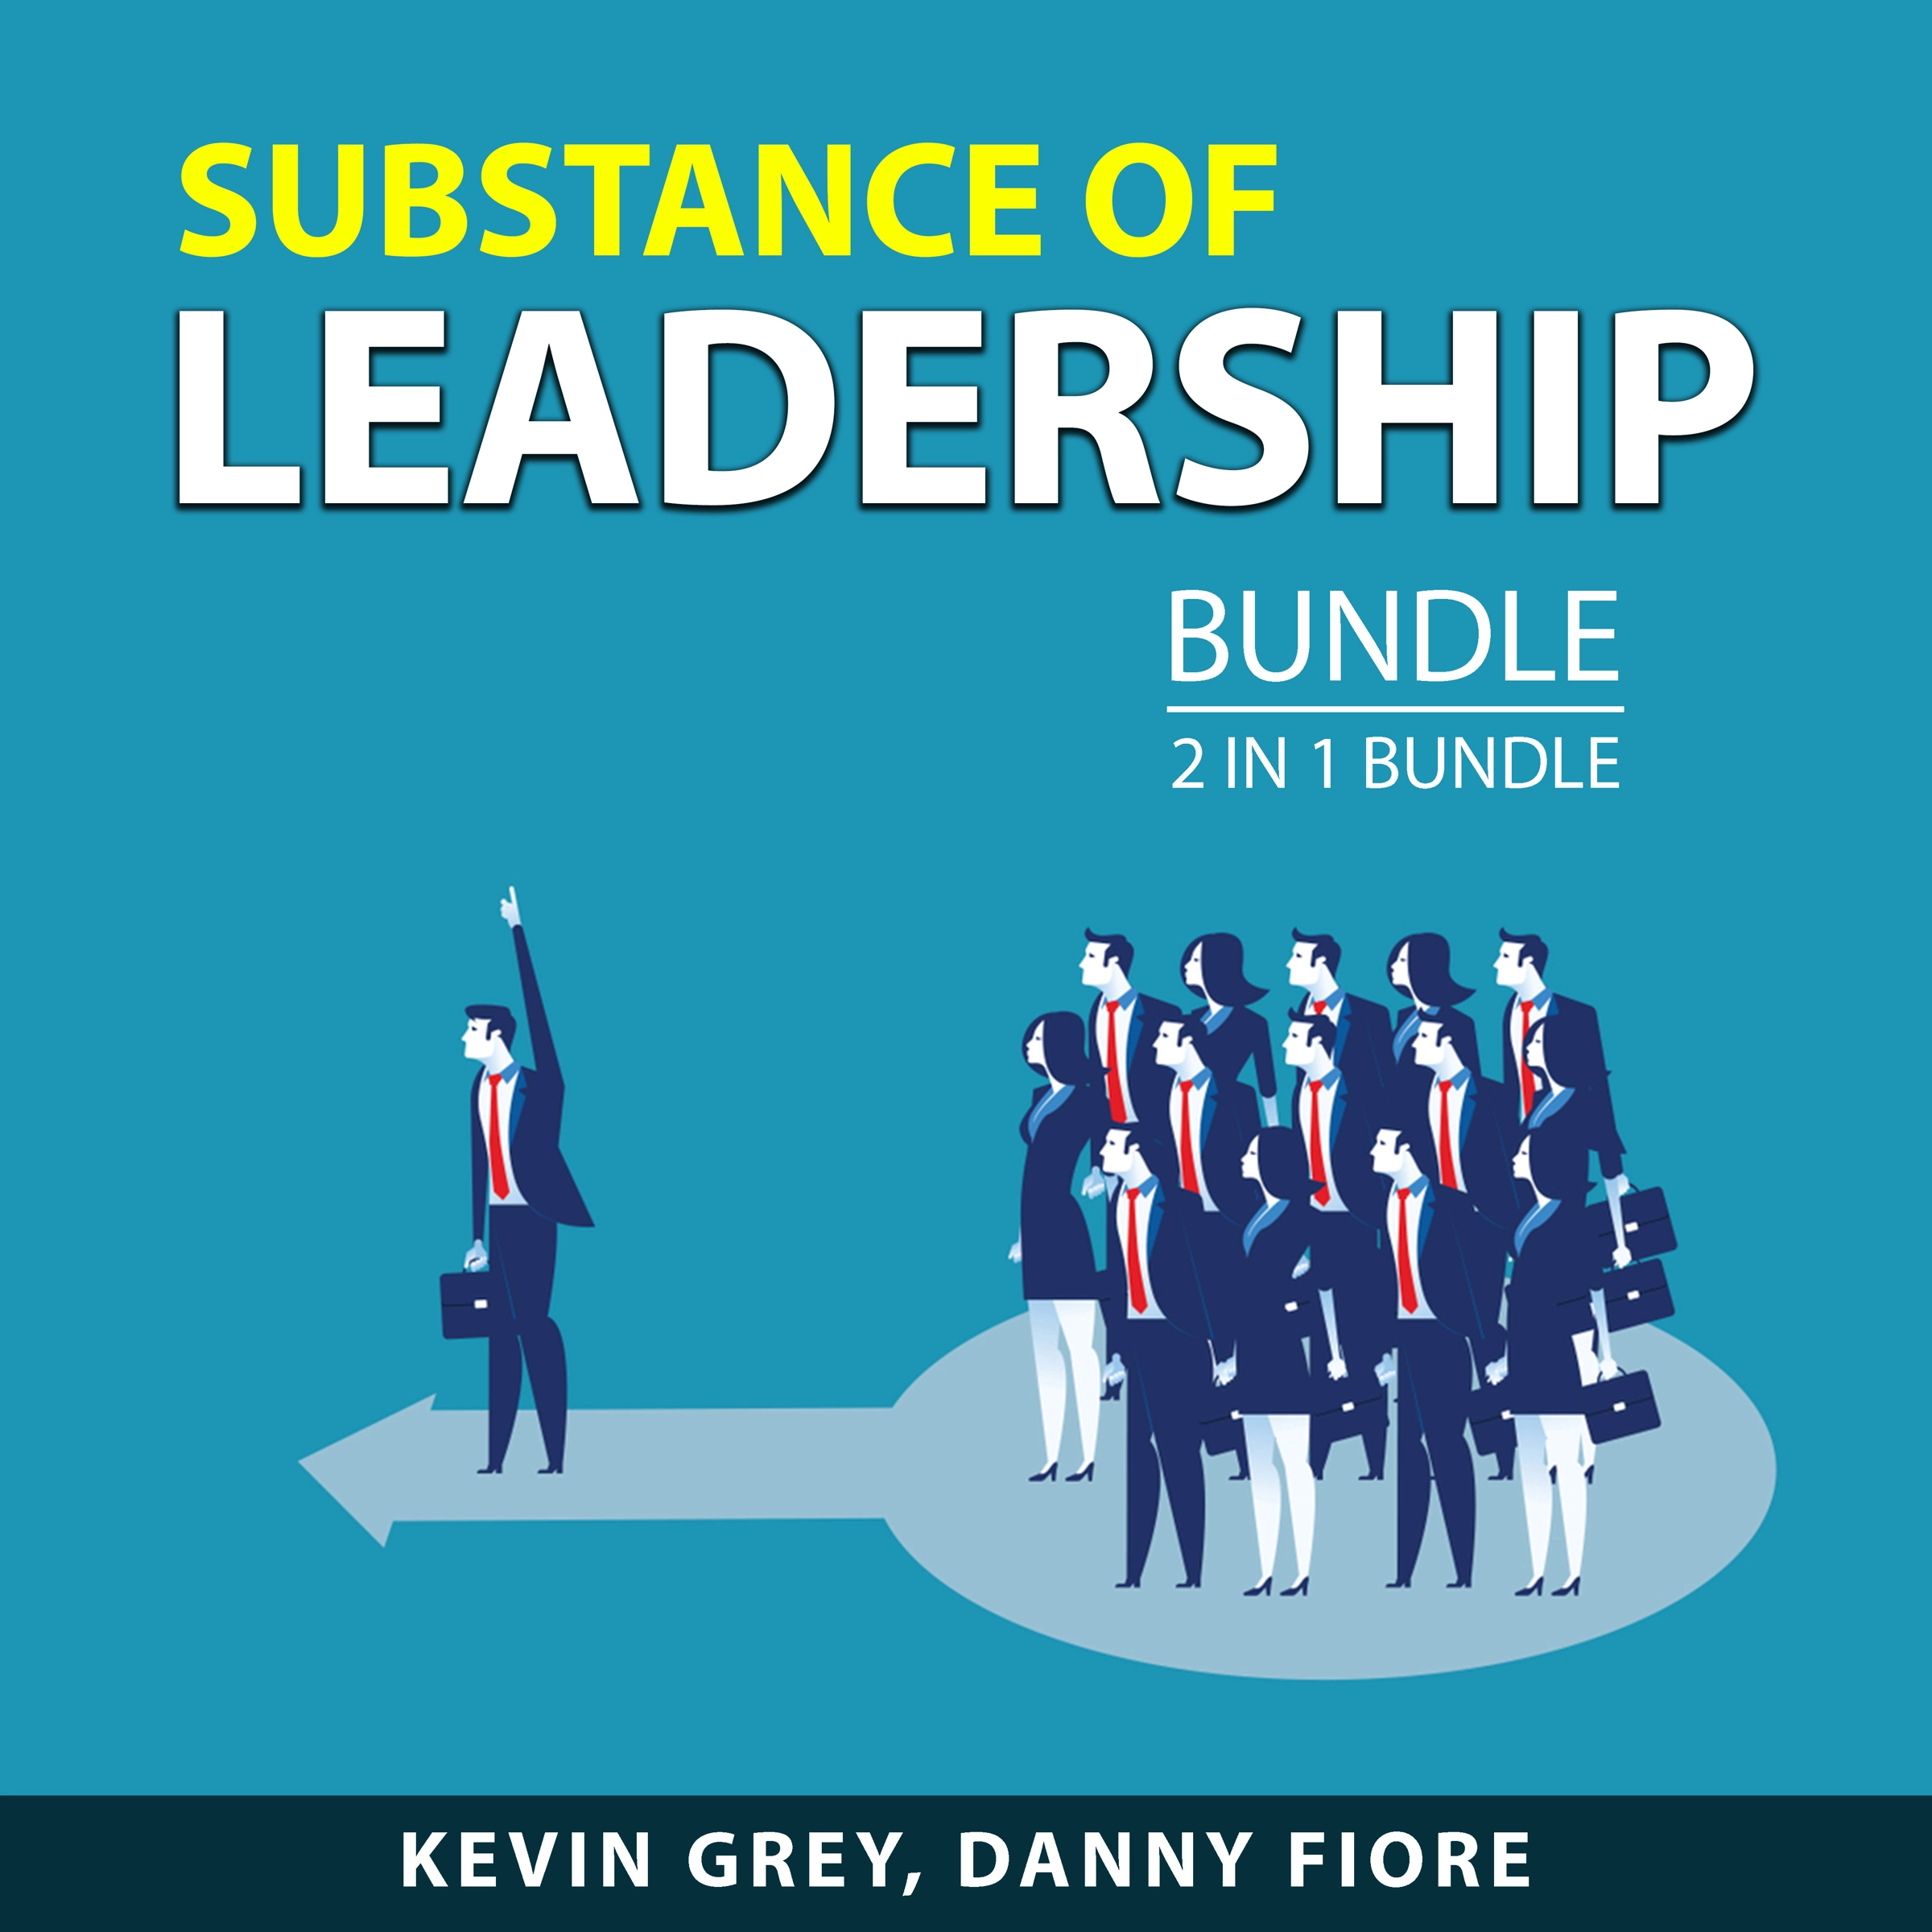 Substance of Leadership Bundle, 2 in 1 Bundle Audiobook by Danny Fiore